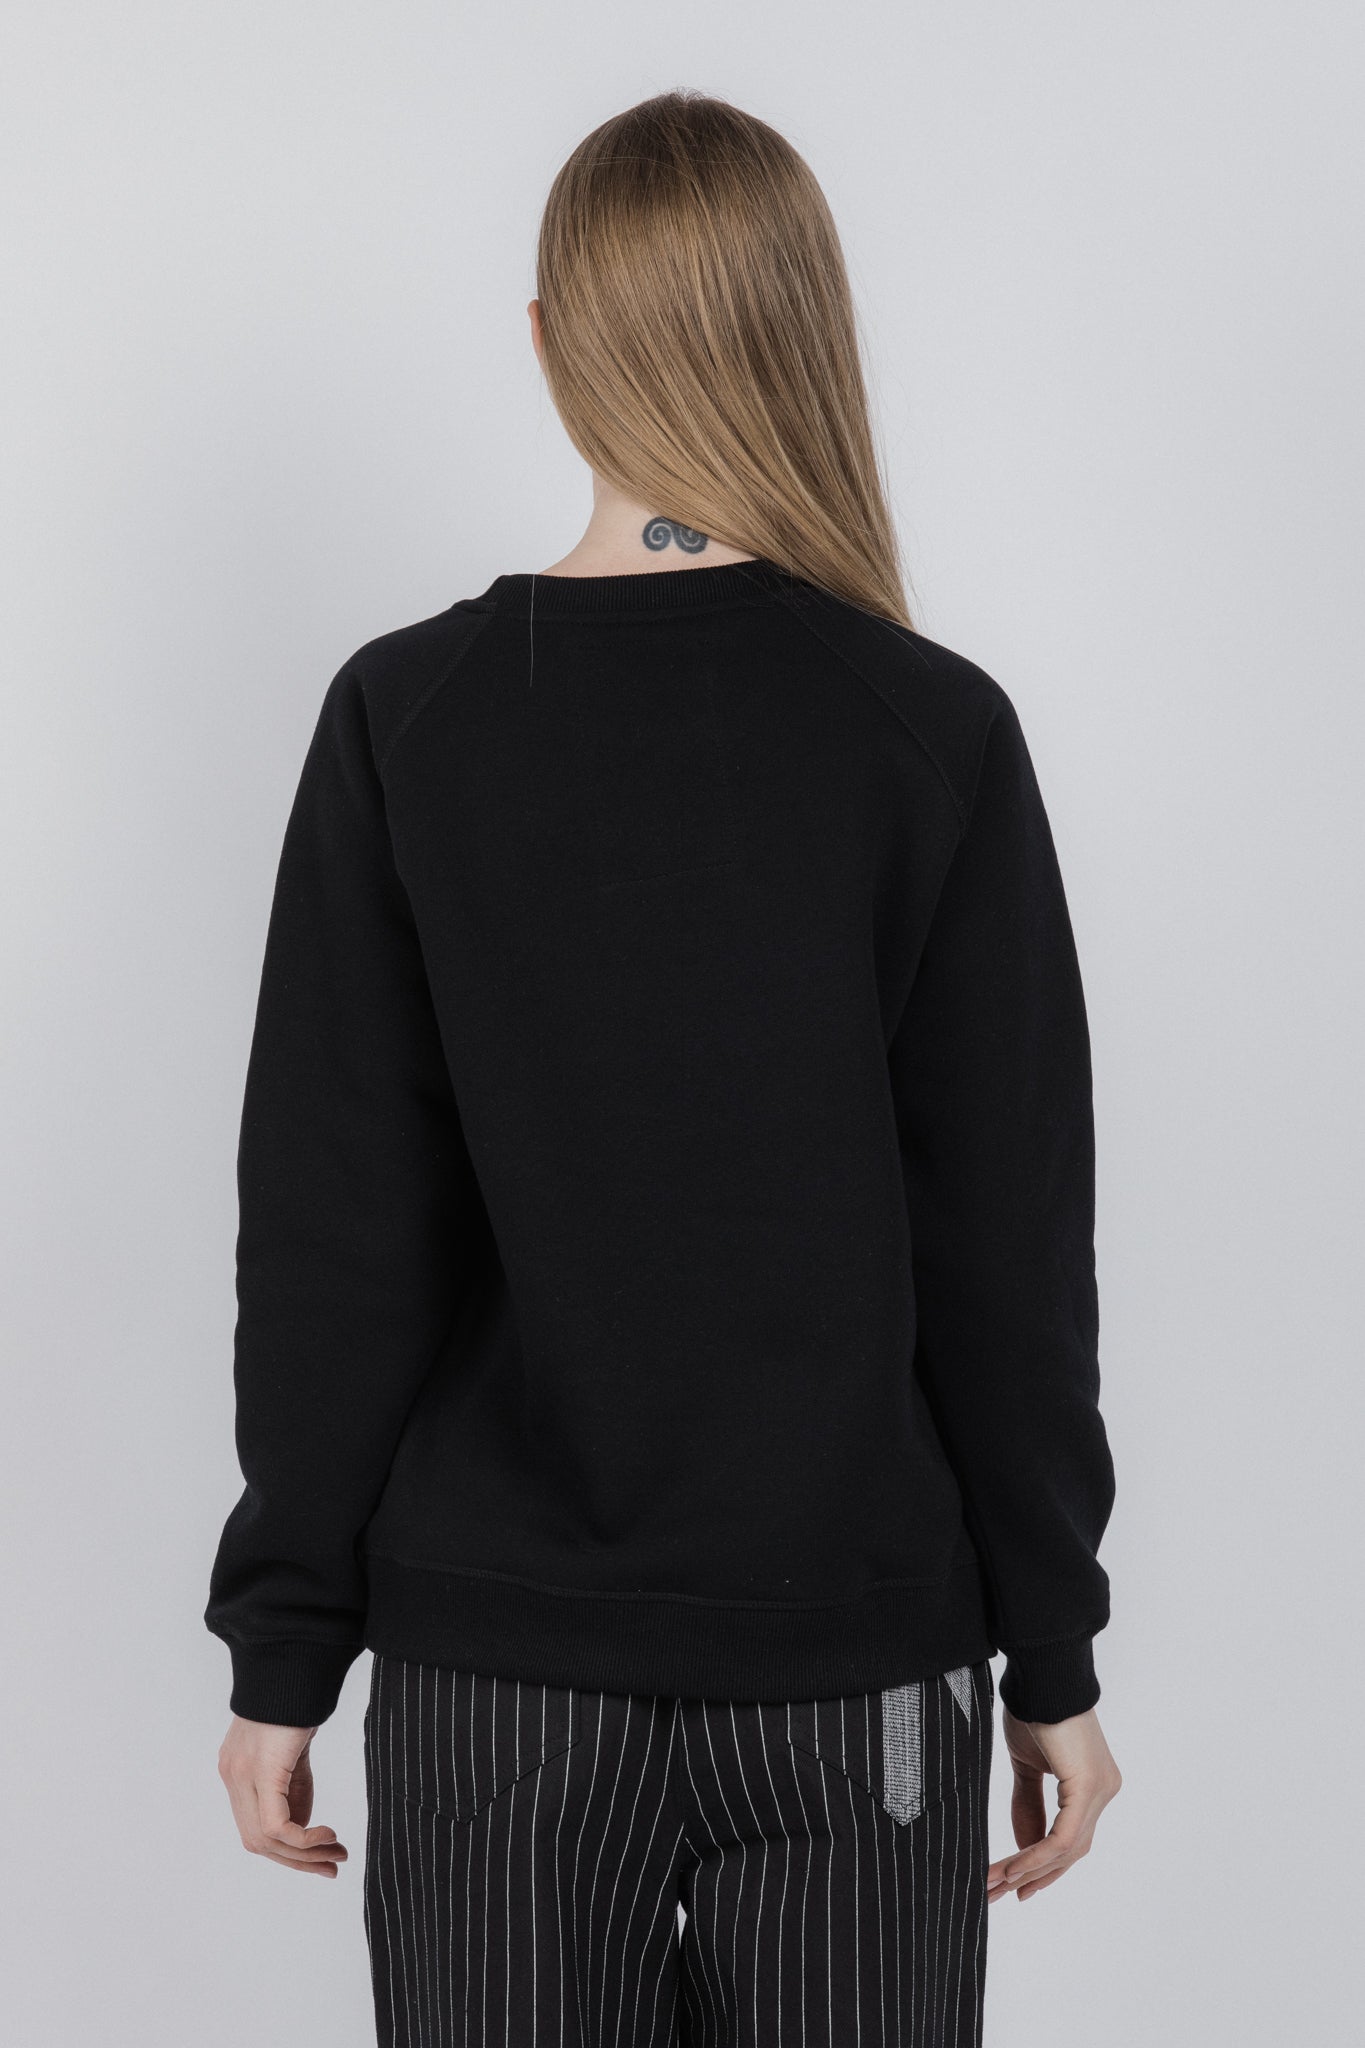 Sweatshirt for women | Black, black - Reet Aus